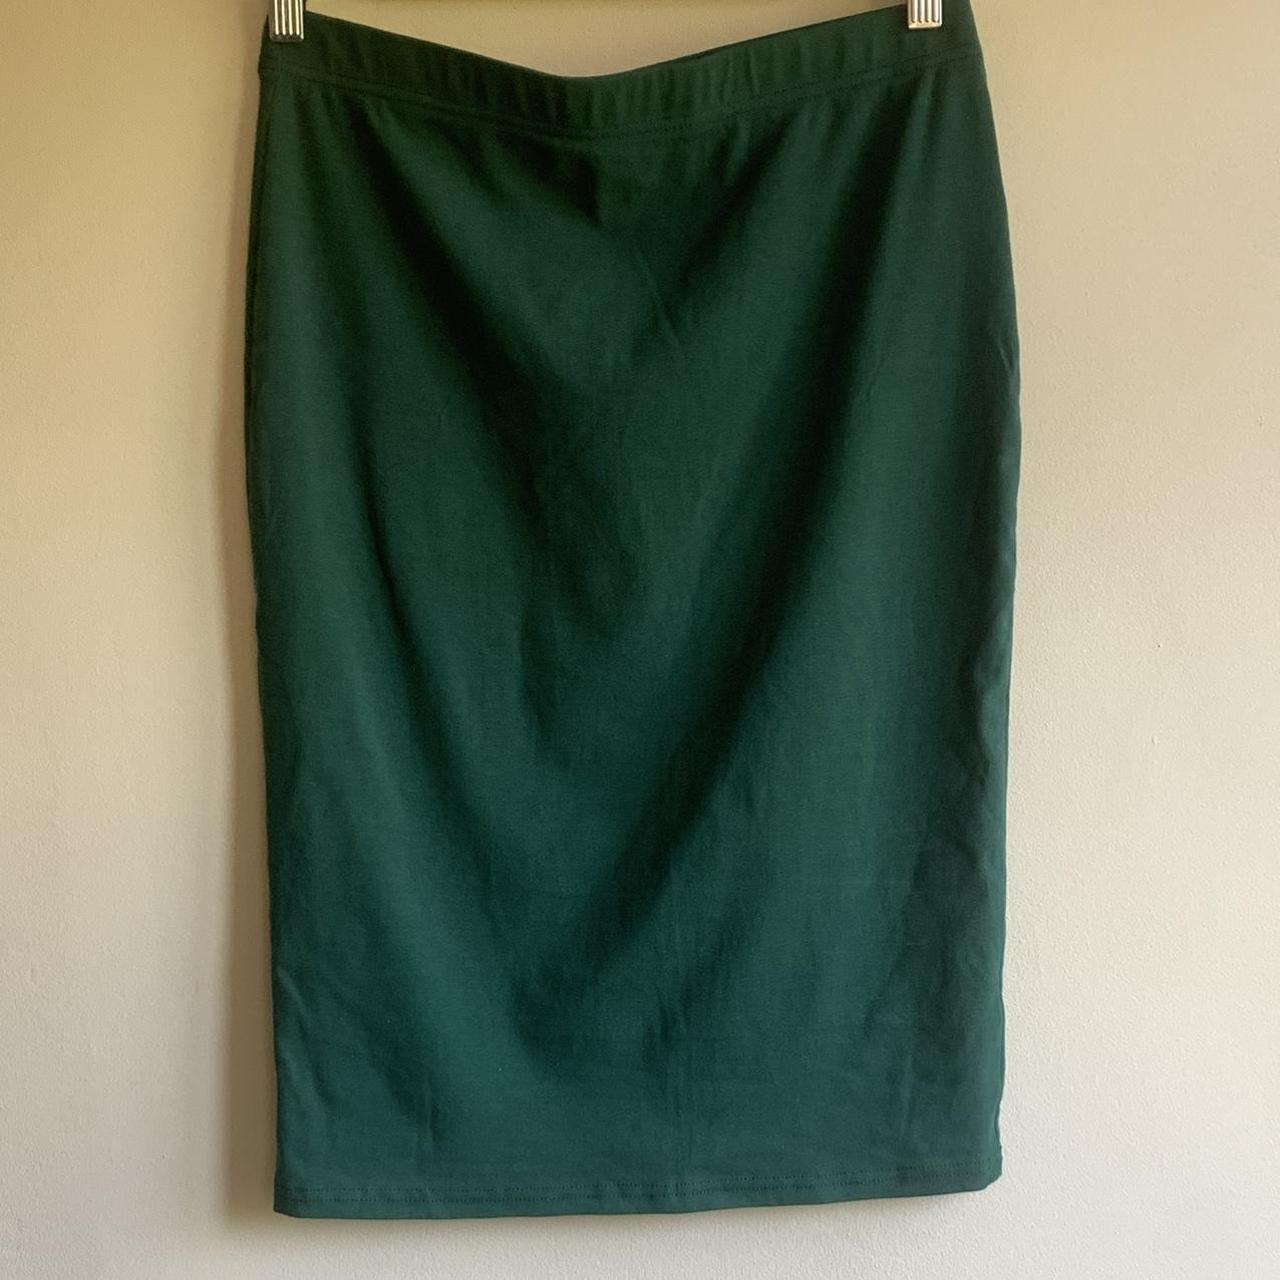 Pencil Tube Skirt Jersey Bottle/ Emerald green Size... - Depop